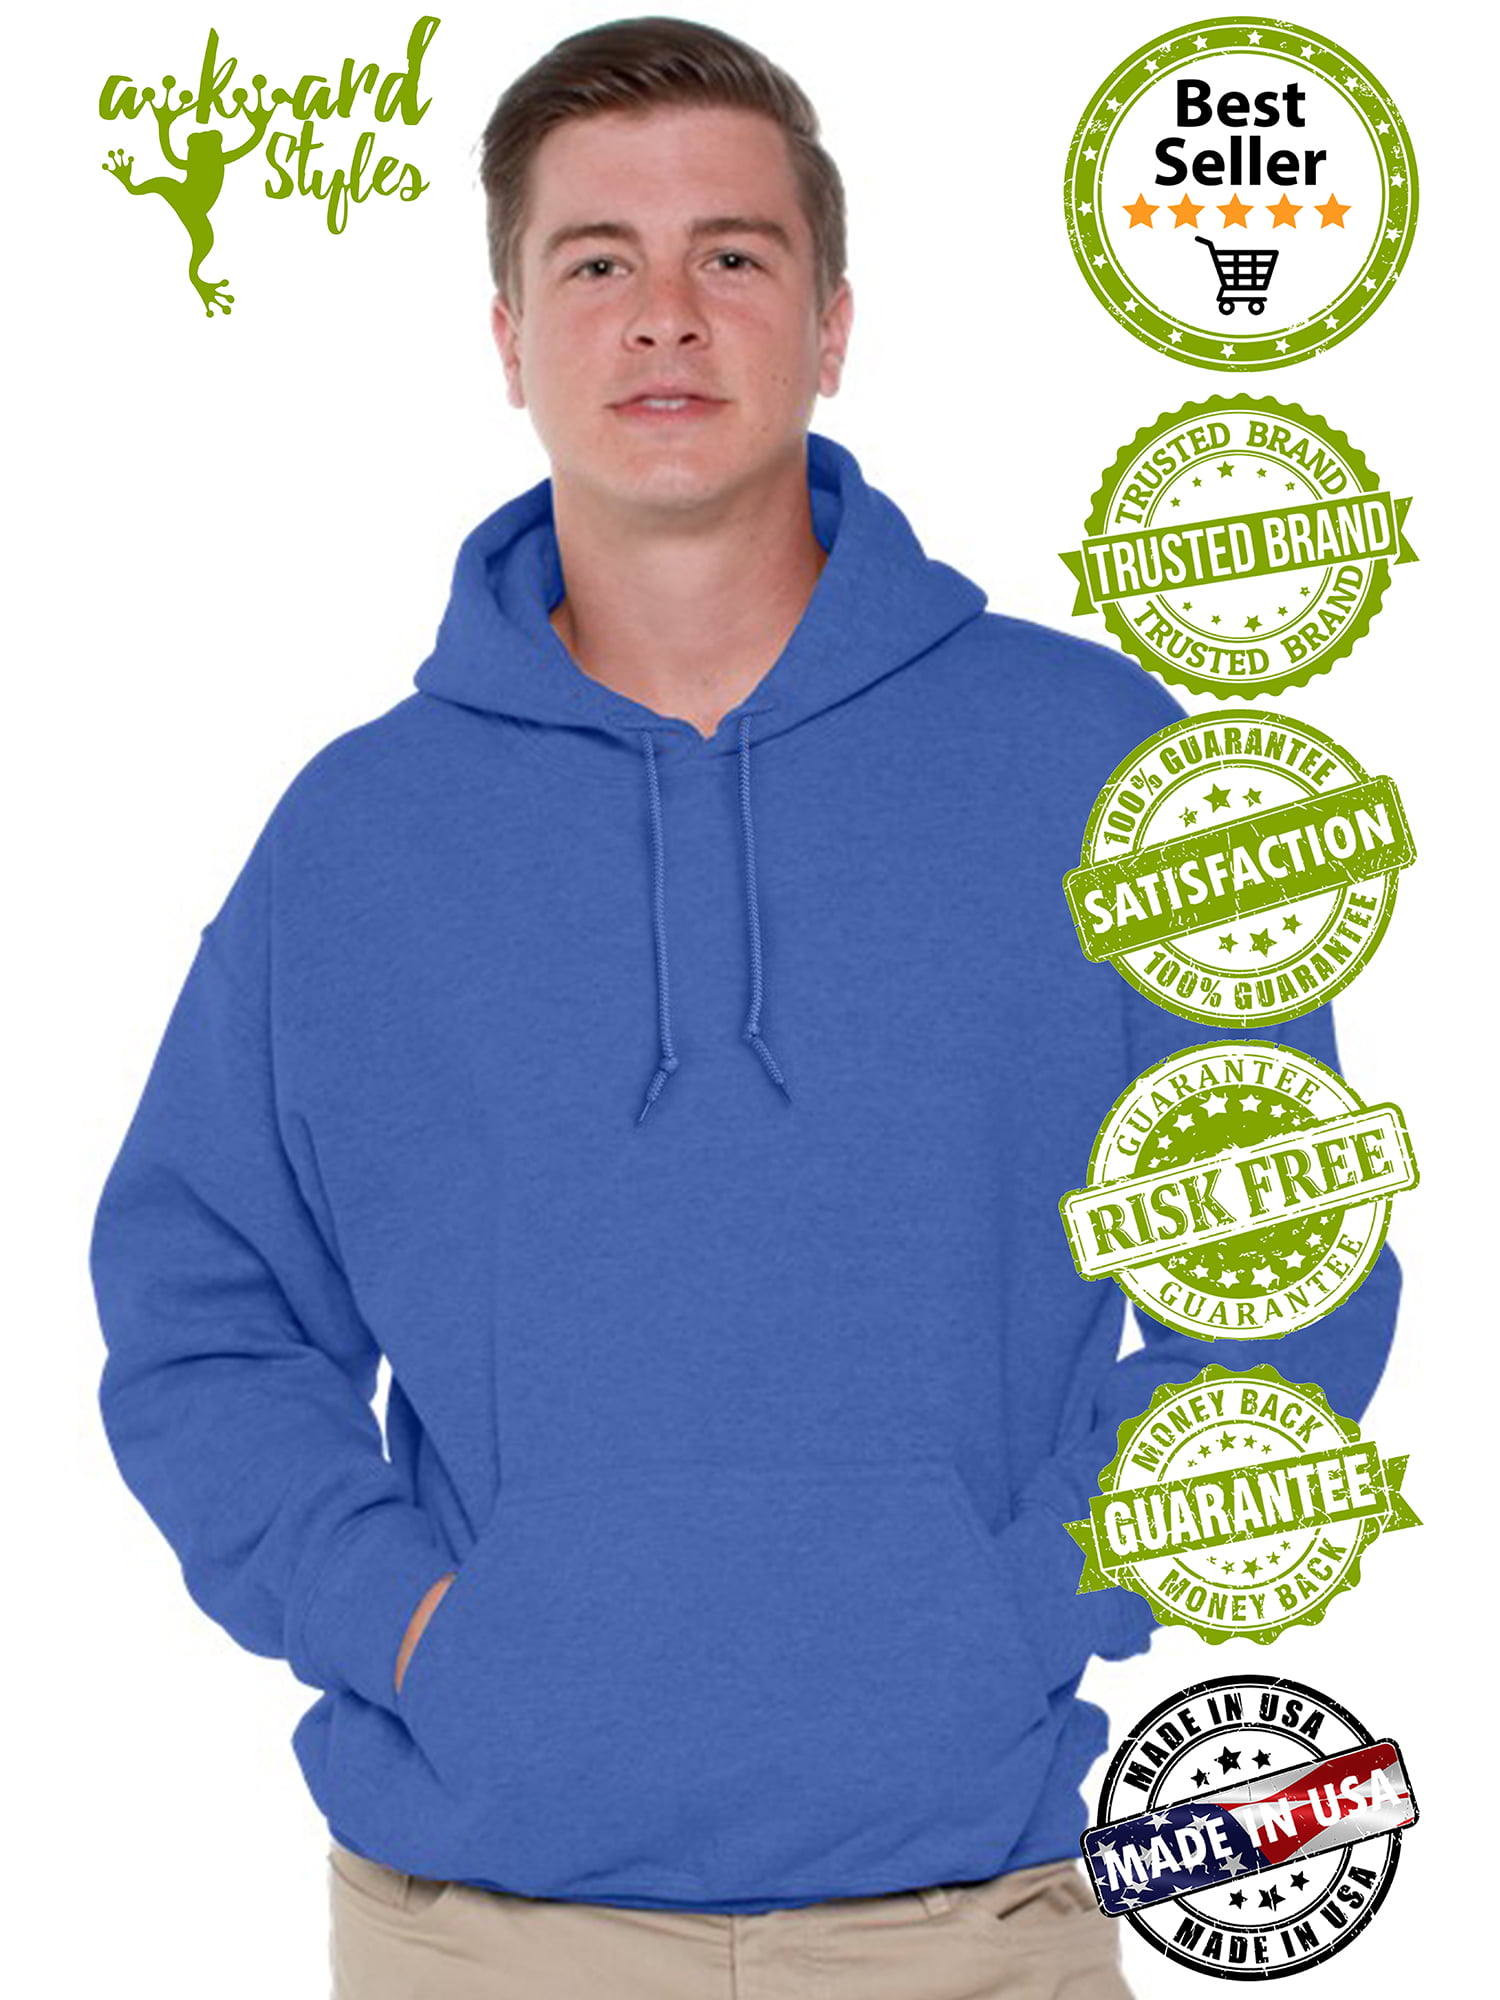 grip heilige vorm Buy Gildan Hoodie Unisex Sweatshirt Hooded Sweatshirts Basic Casual Jumper  Sweatshirts for Men for Women Online at Lowest Price in Ubuy Philippines.  357665935